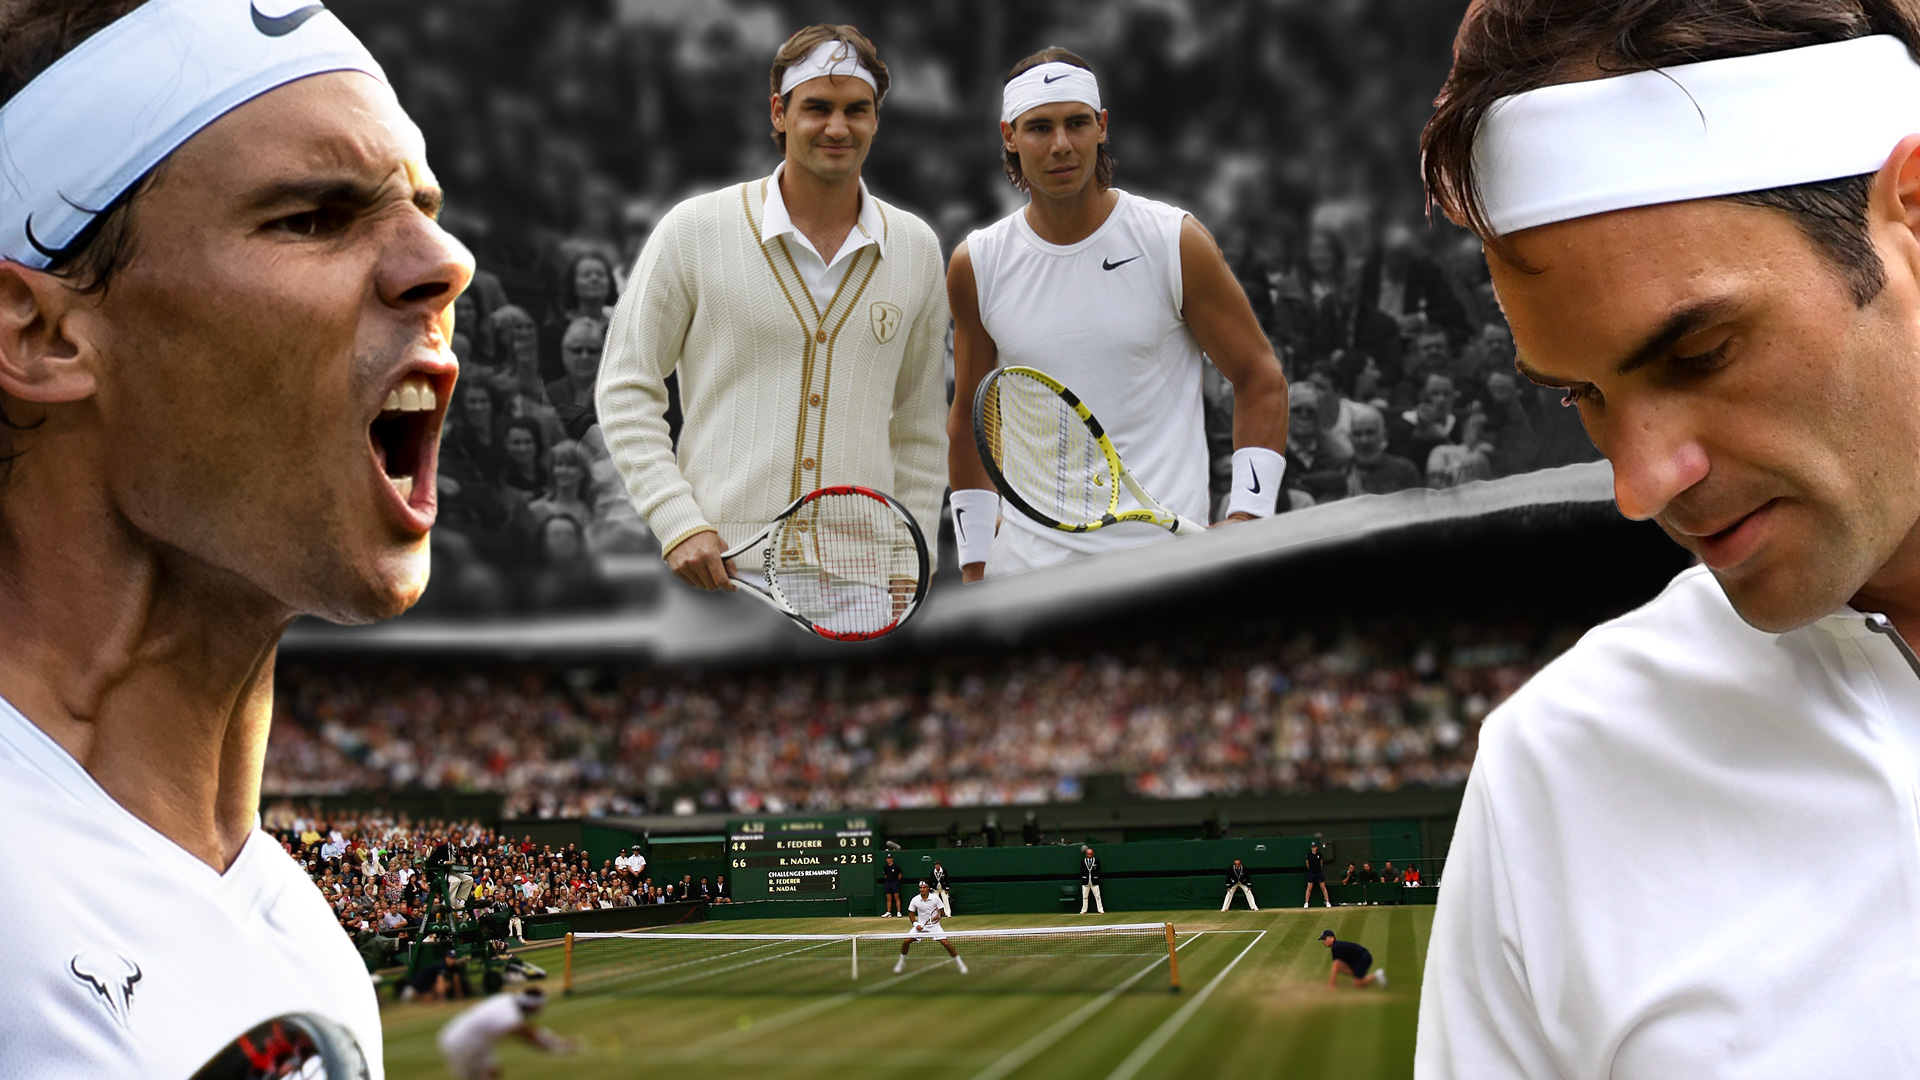 Federer vs. Nadal: The Greatest Tennis Rivalry